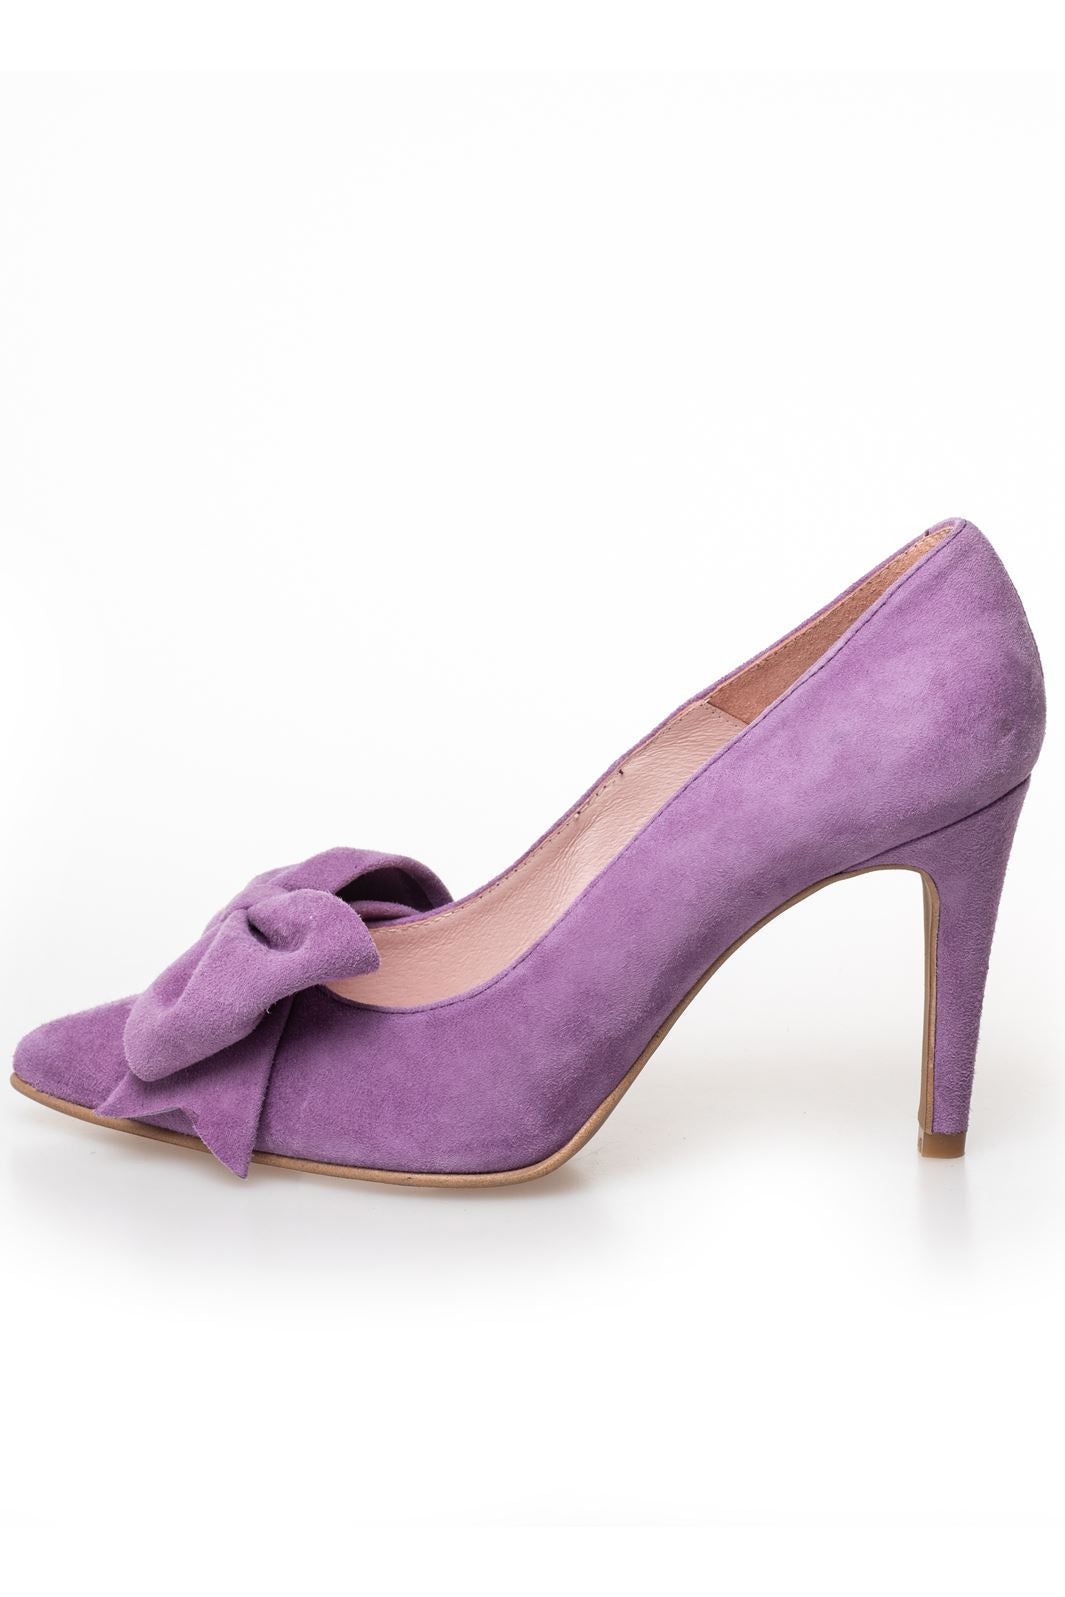 Forudbestilling - Copenhagen Shoes by Josefine Valentin - Maite 22 - 251 Purple (Mart/April) Stiletter 